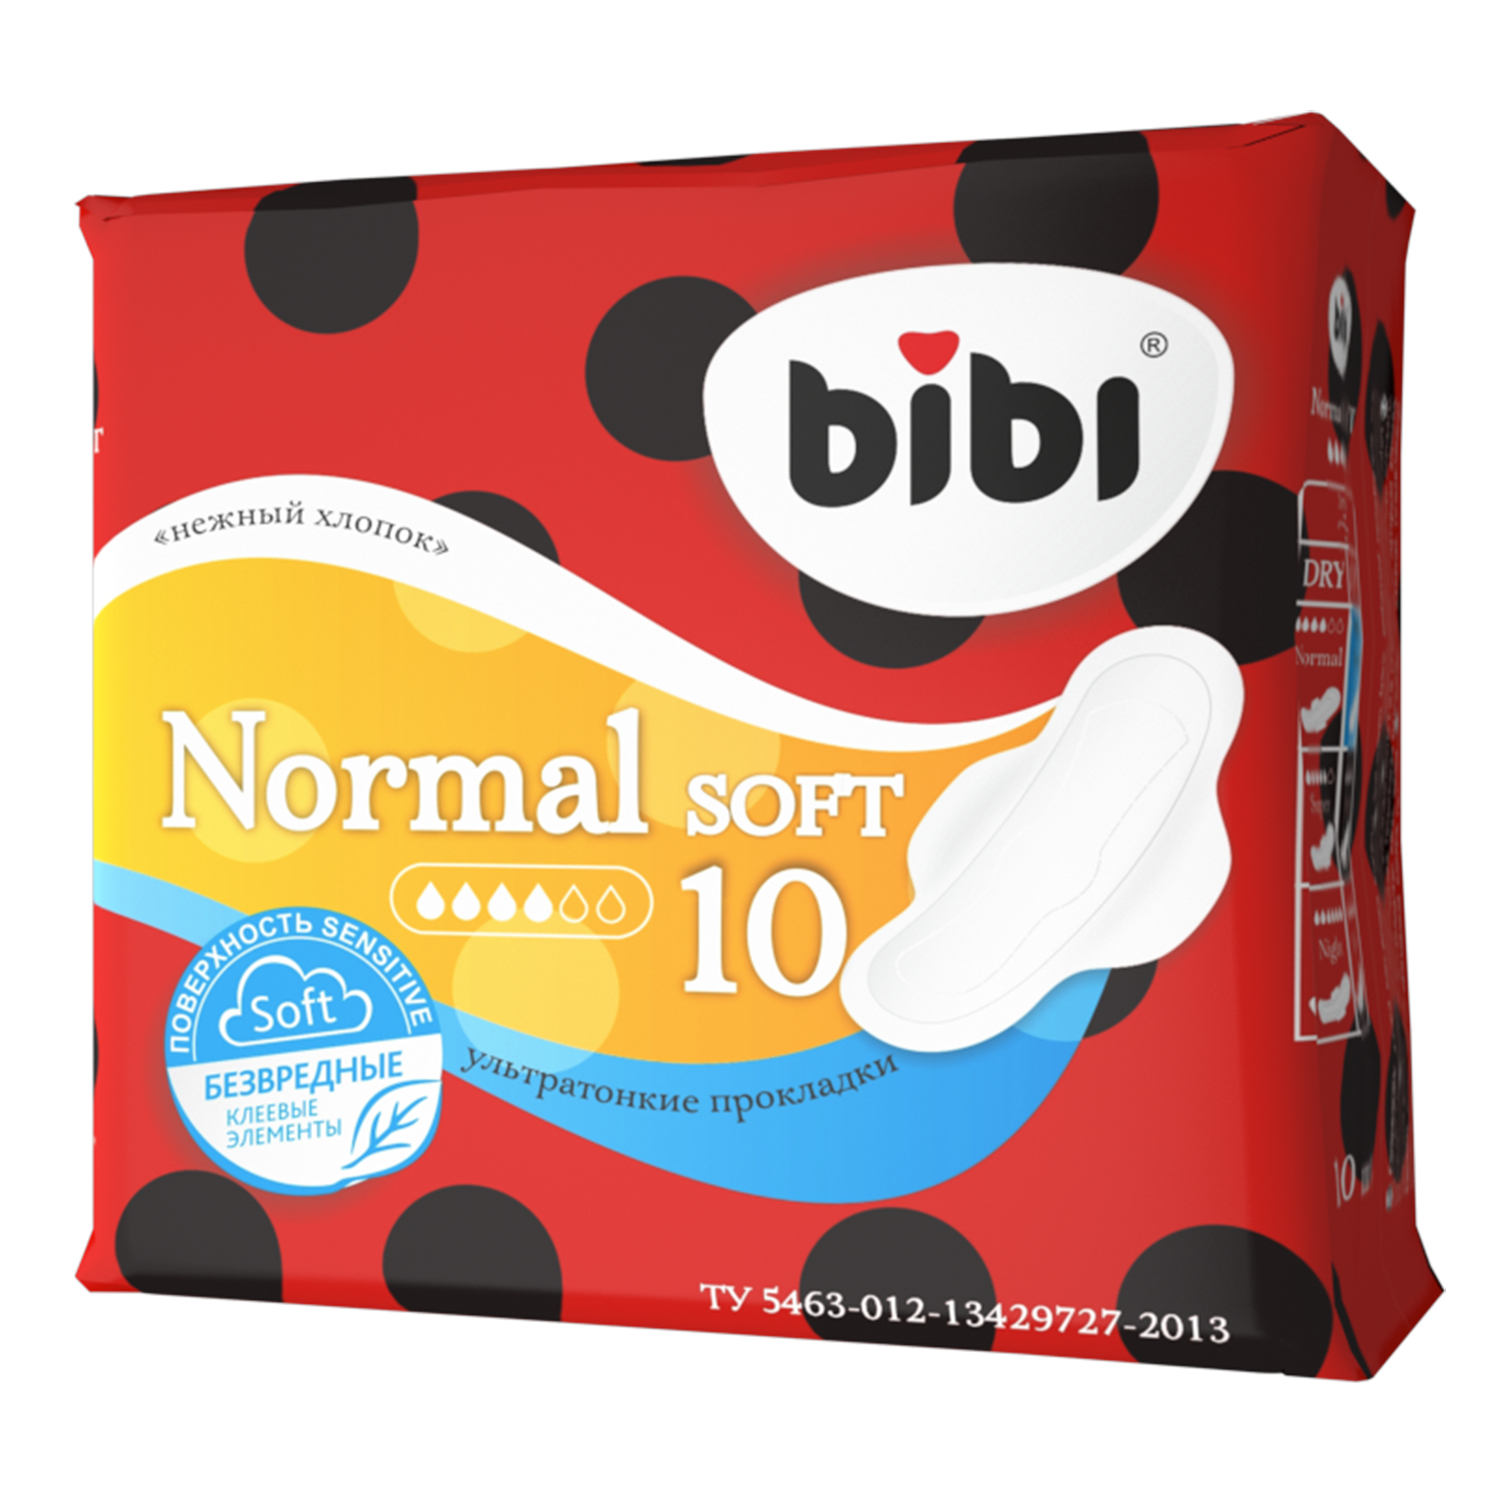 Прокладки Bibi Normal Soft 3 упаковки - фото 2